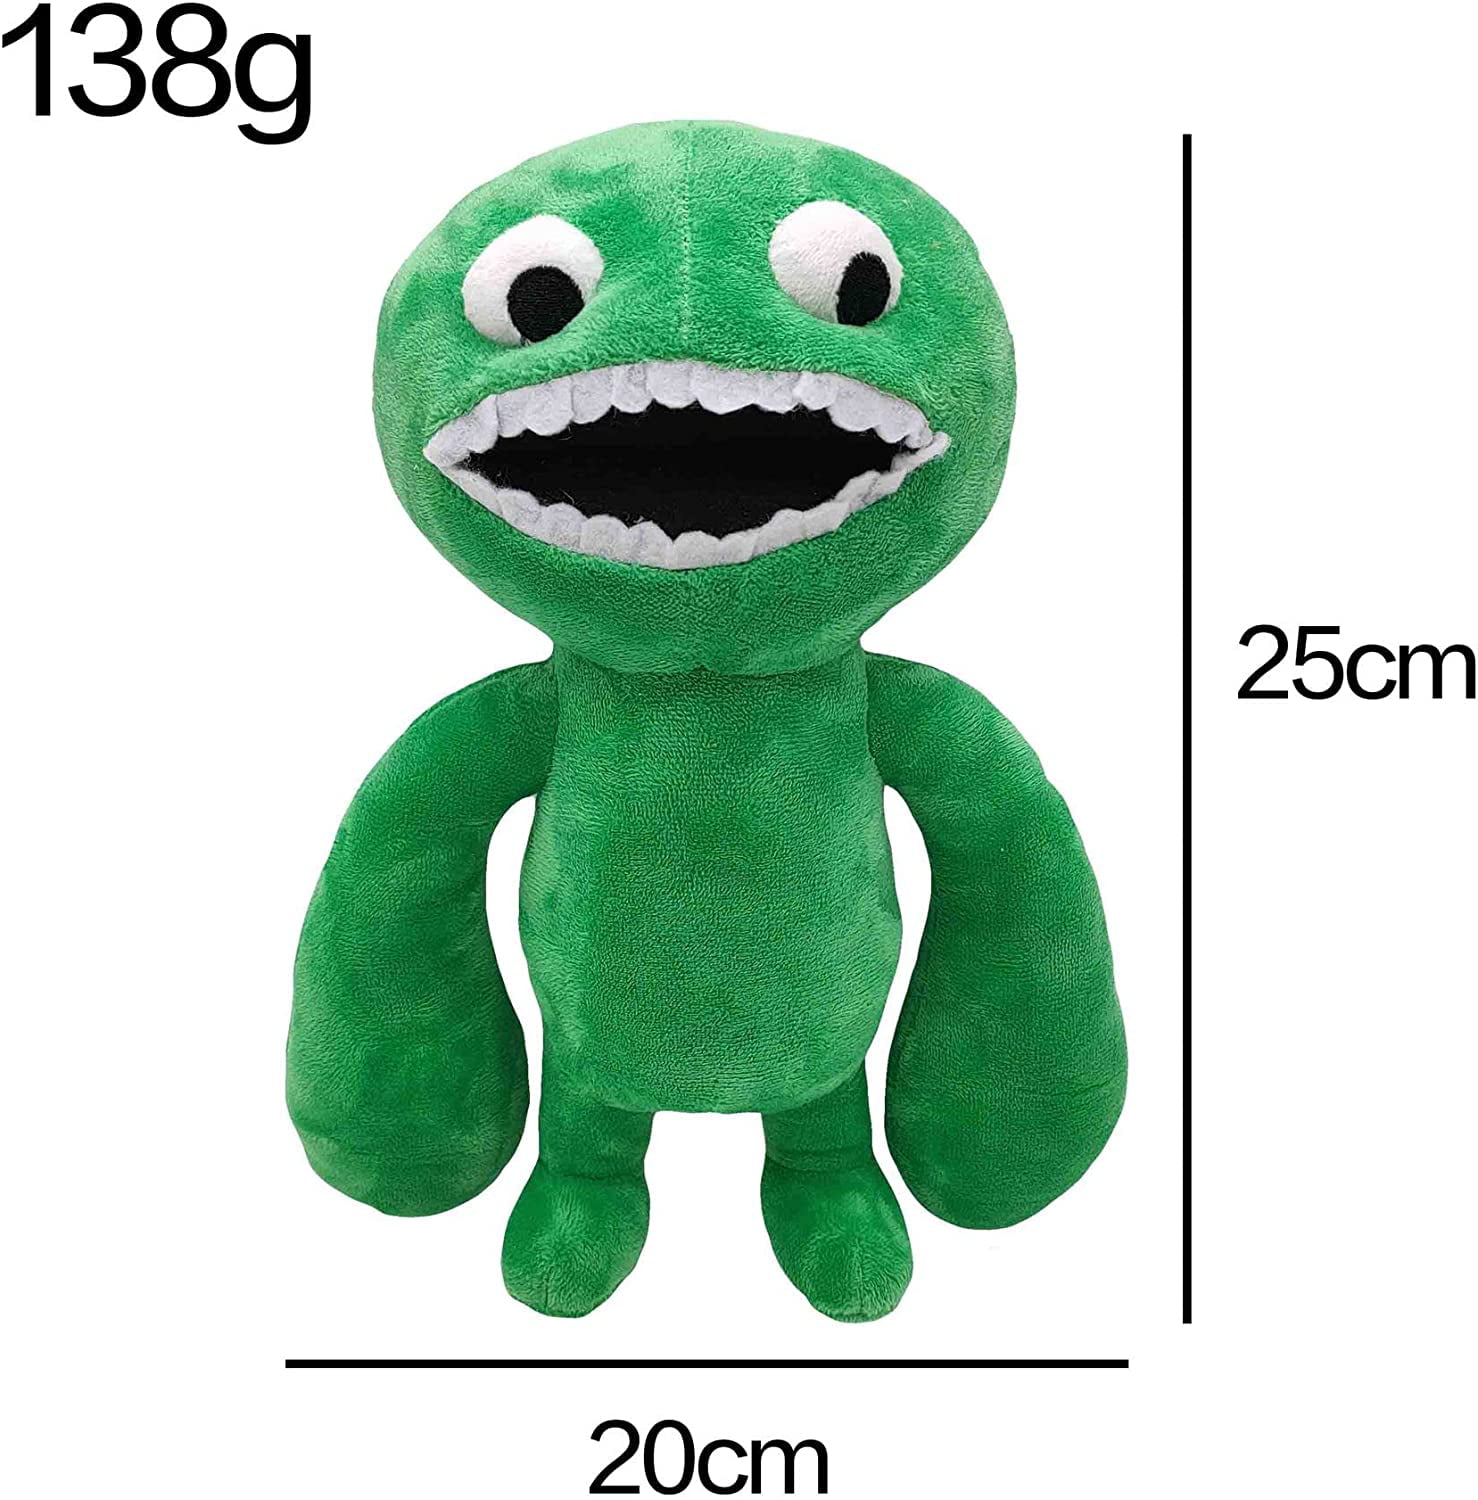  UKFCXQT Garten of Banban 2 Plush, 10 inches Plush Garten of Ban  ban Jumbo Josh Plushies Toys for Fans, Soft Monster Horror Stuffed Animal  Plushies Doll Gifts for Kids Friends Boys